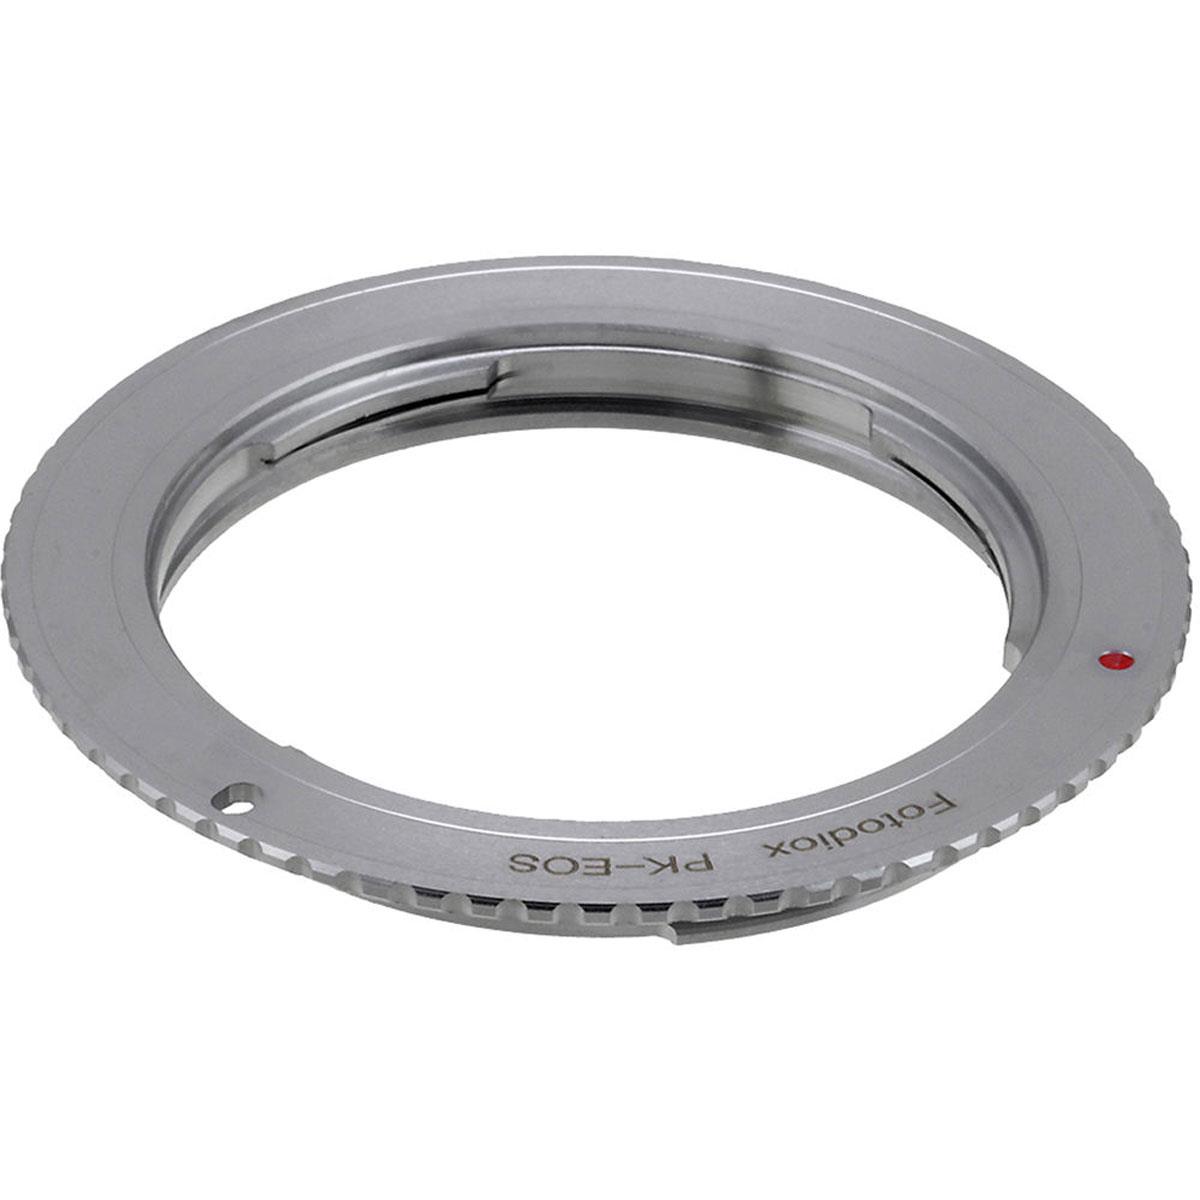 Image of Fotodiox Lens Mount Adapter for Pentax K Mount SLR Lens to Canon EF-S SLR Camera